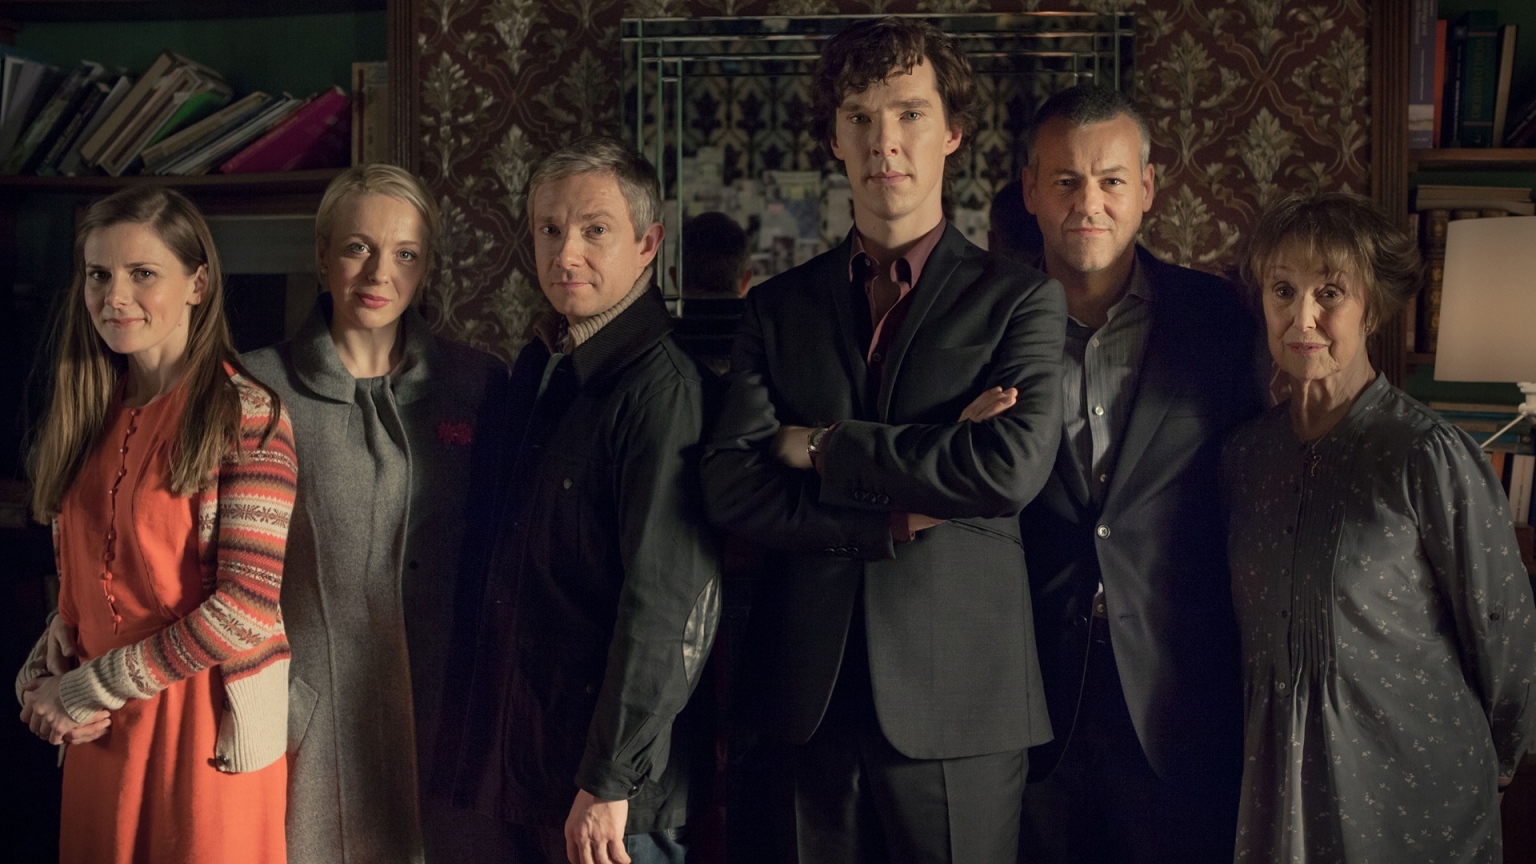 BBC Sherlock Cast for 1536 x 864 HDTV resolution